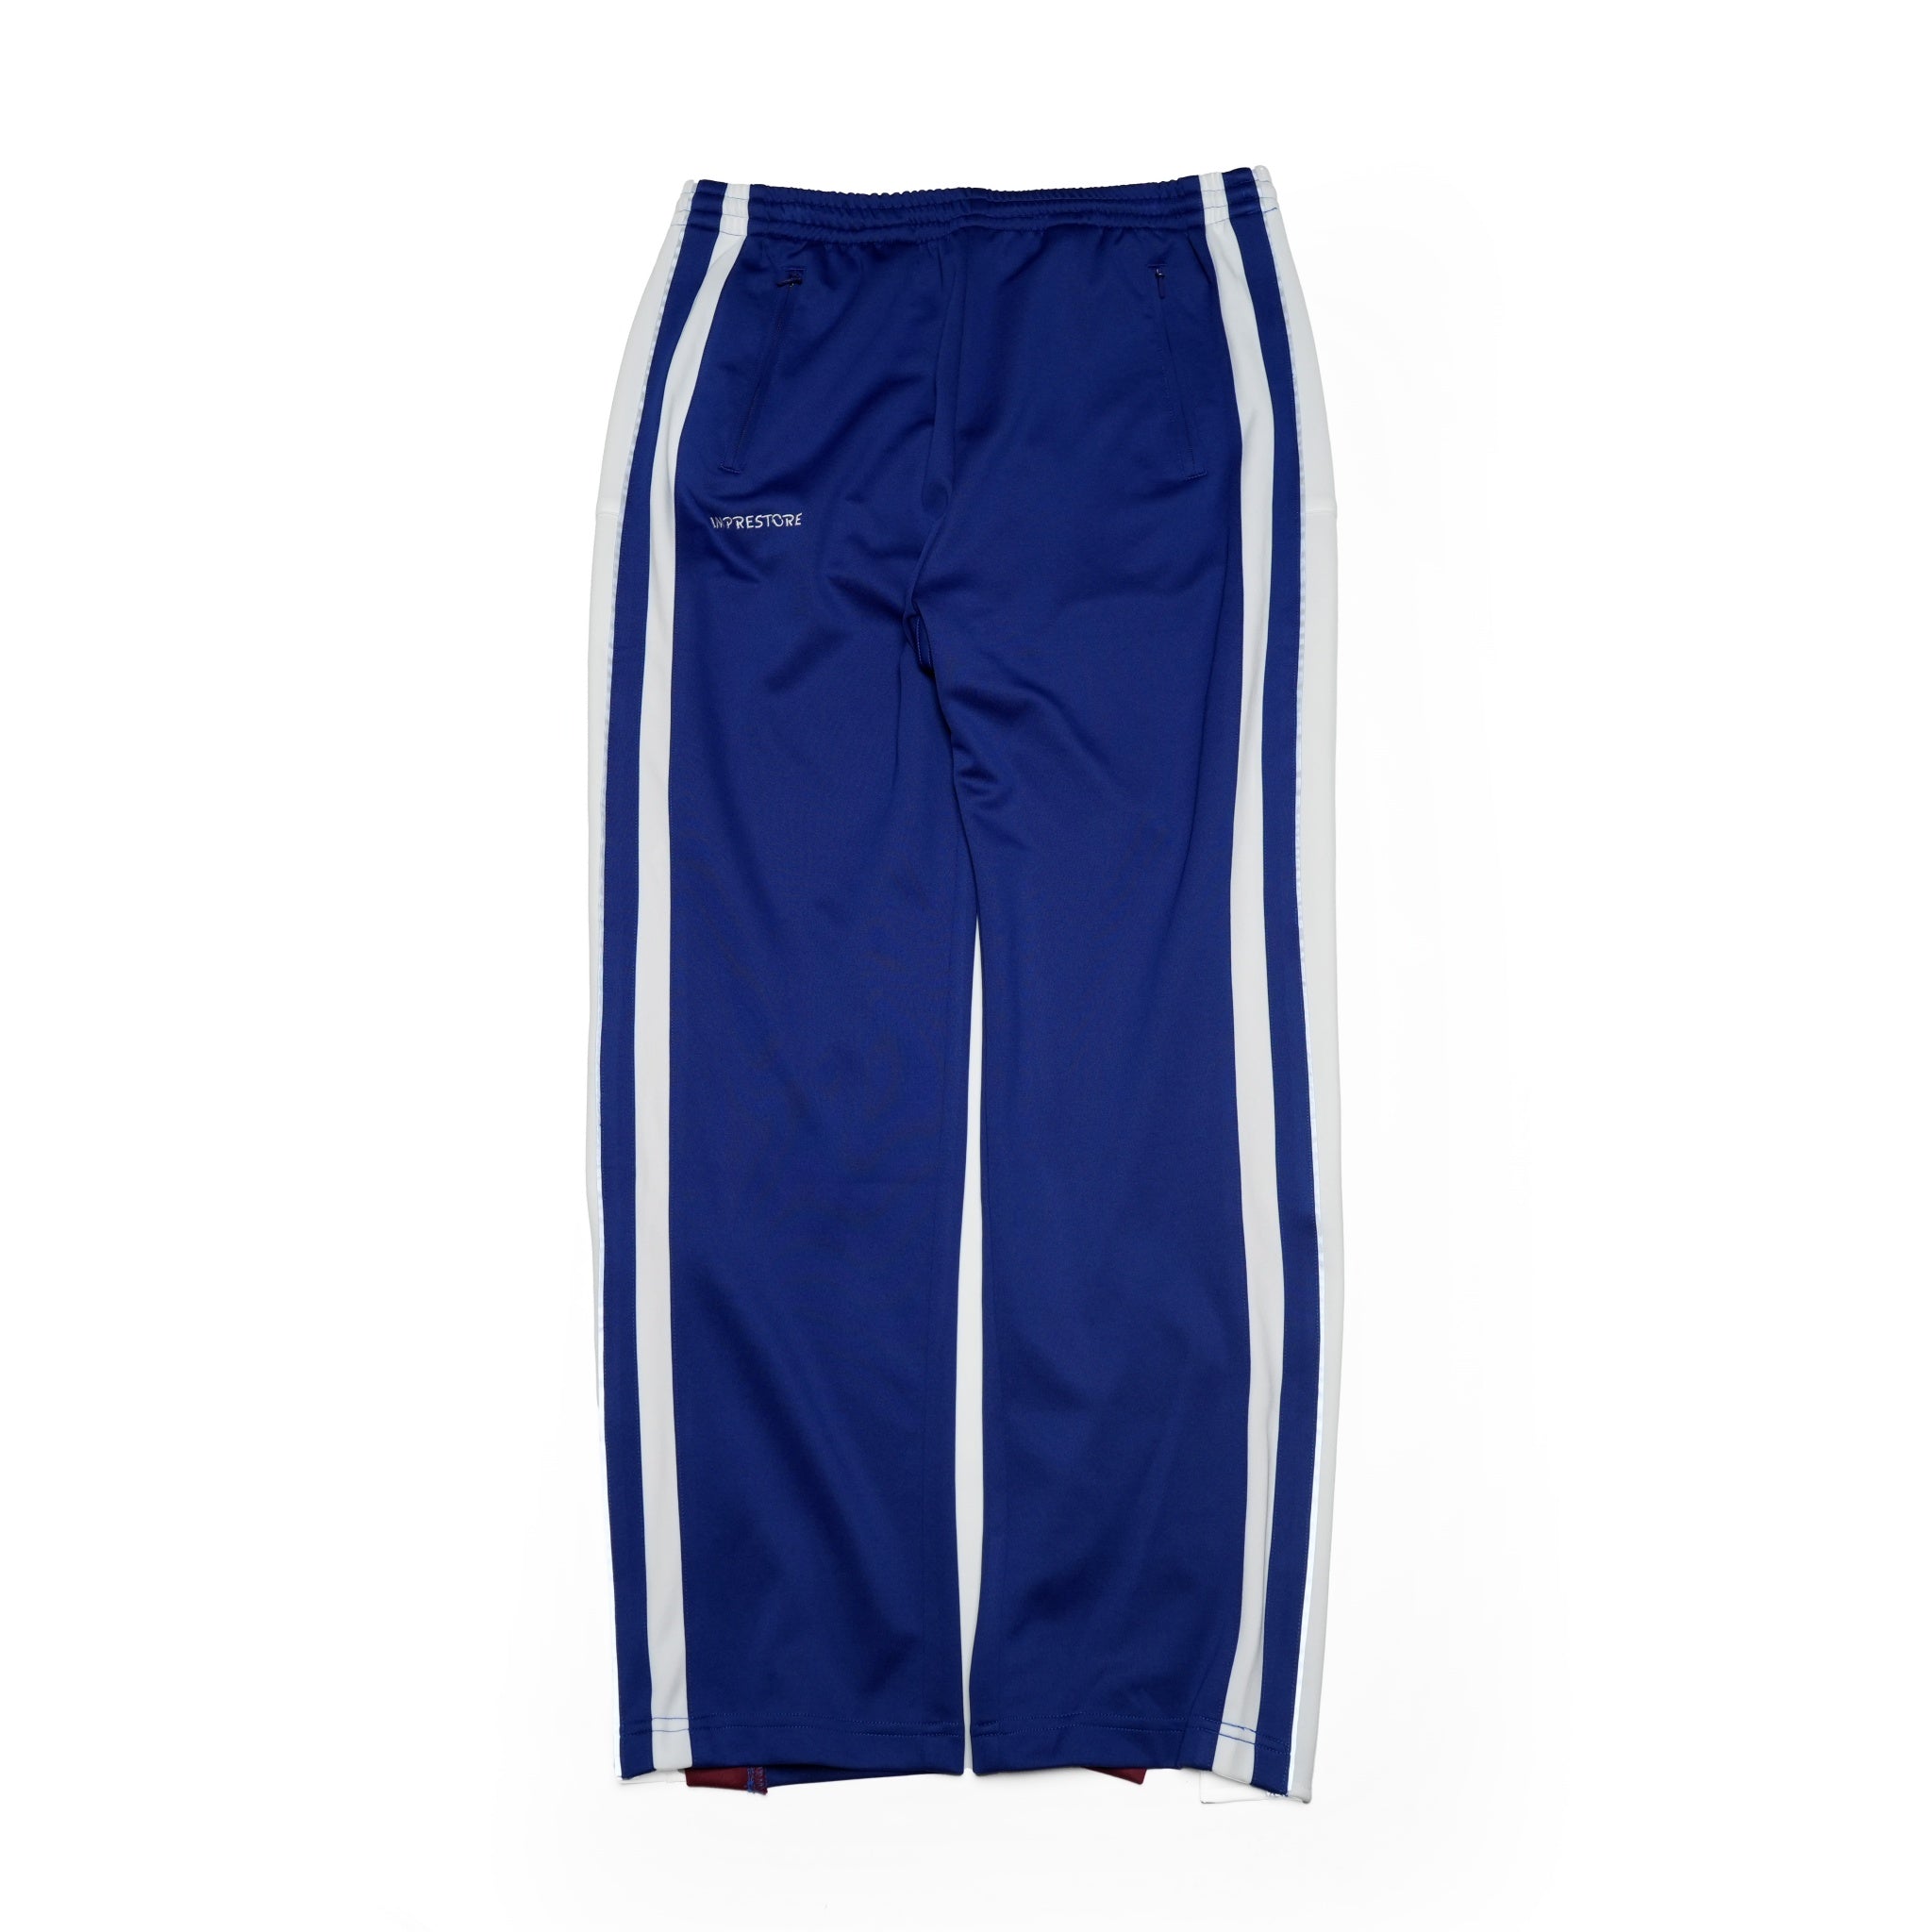 No:Warren | Name:Basket Jersey Pants | Color:Blue/maroon【IMPRESTORE_インプレストア】